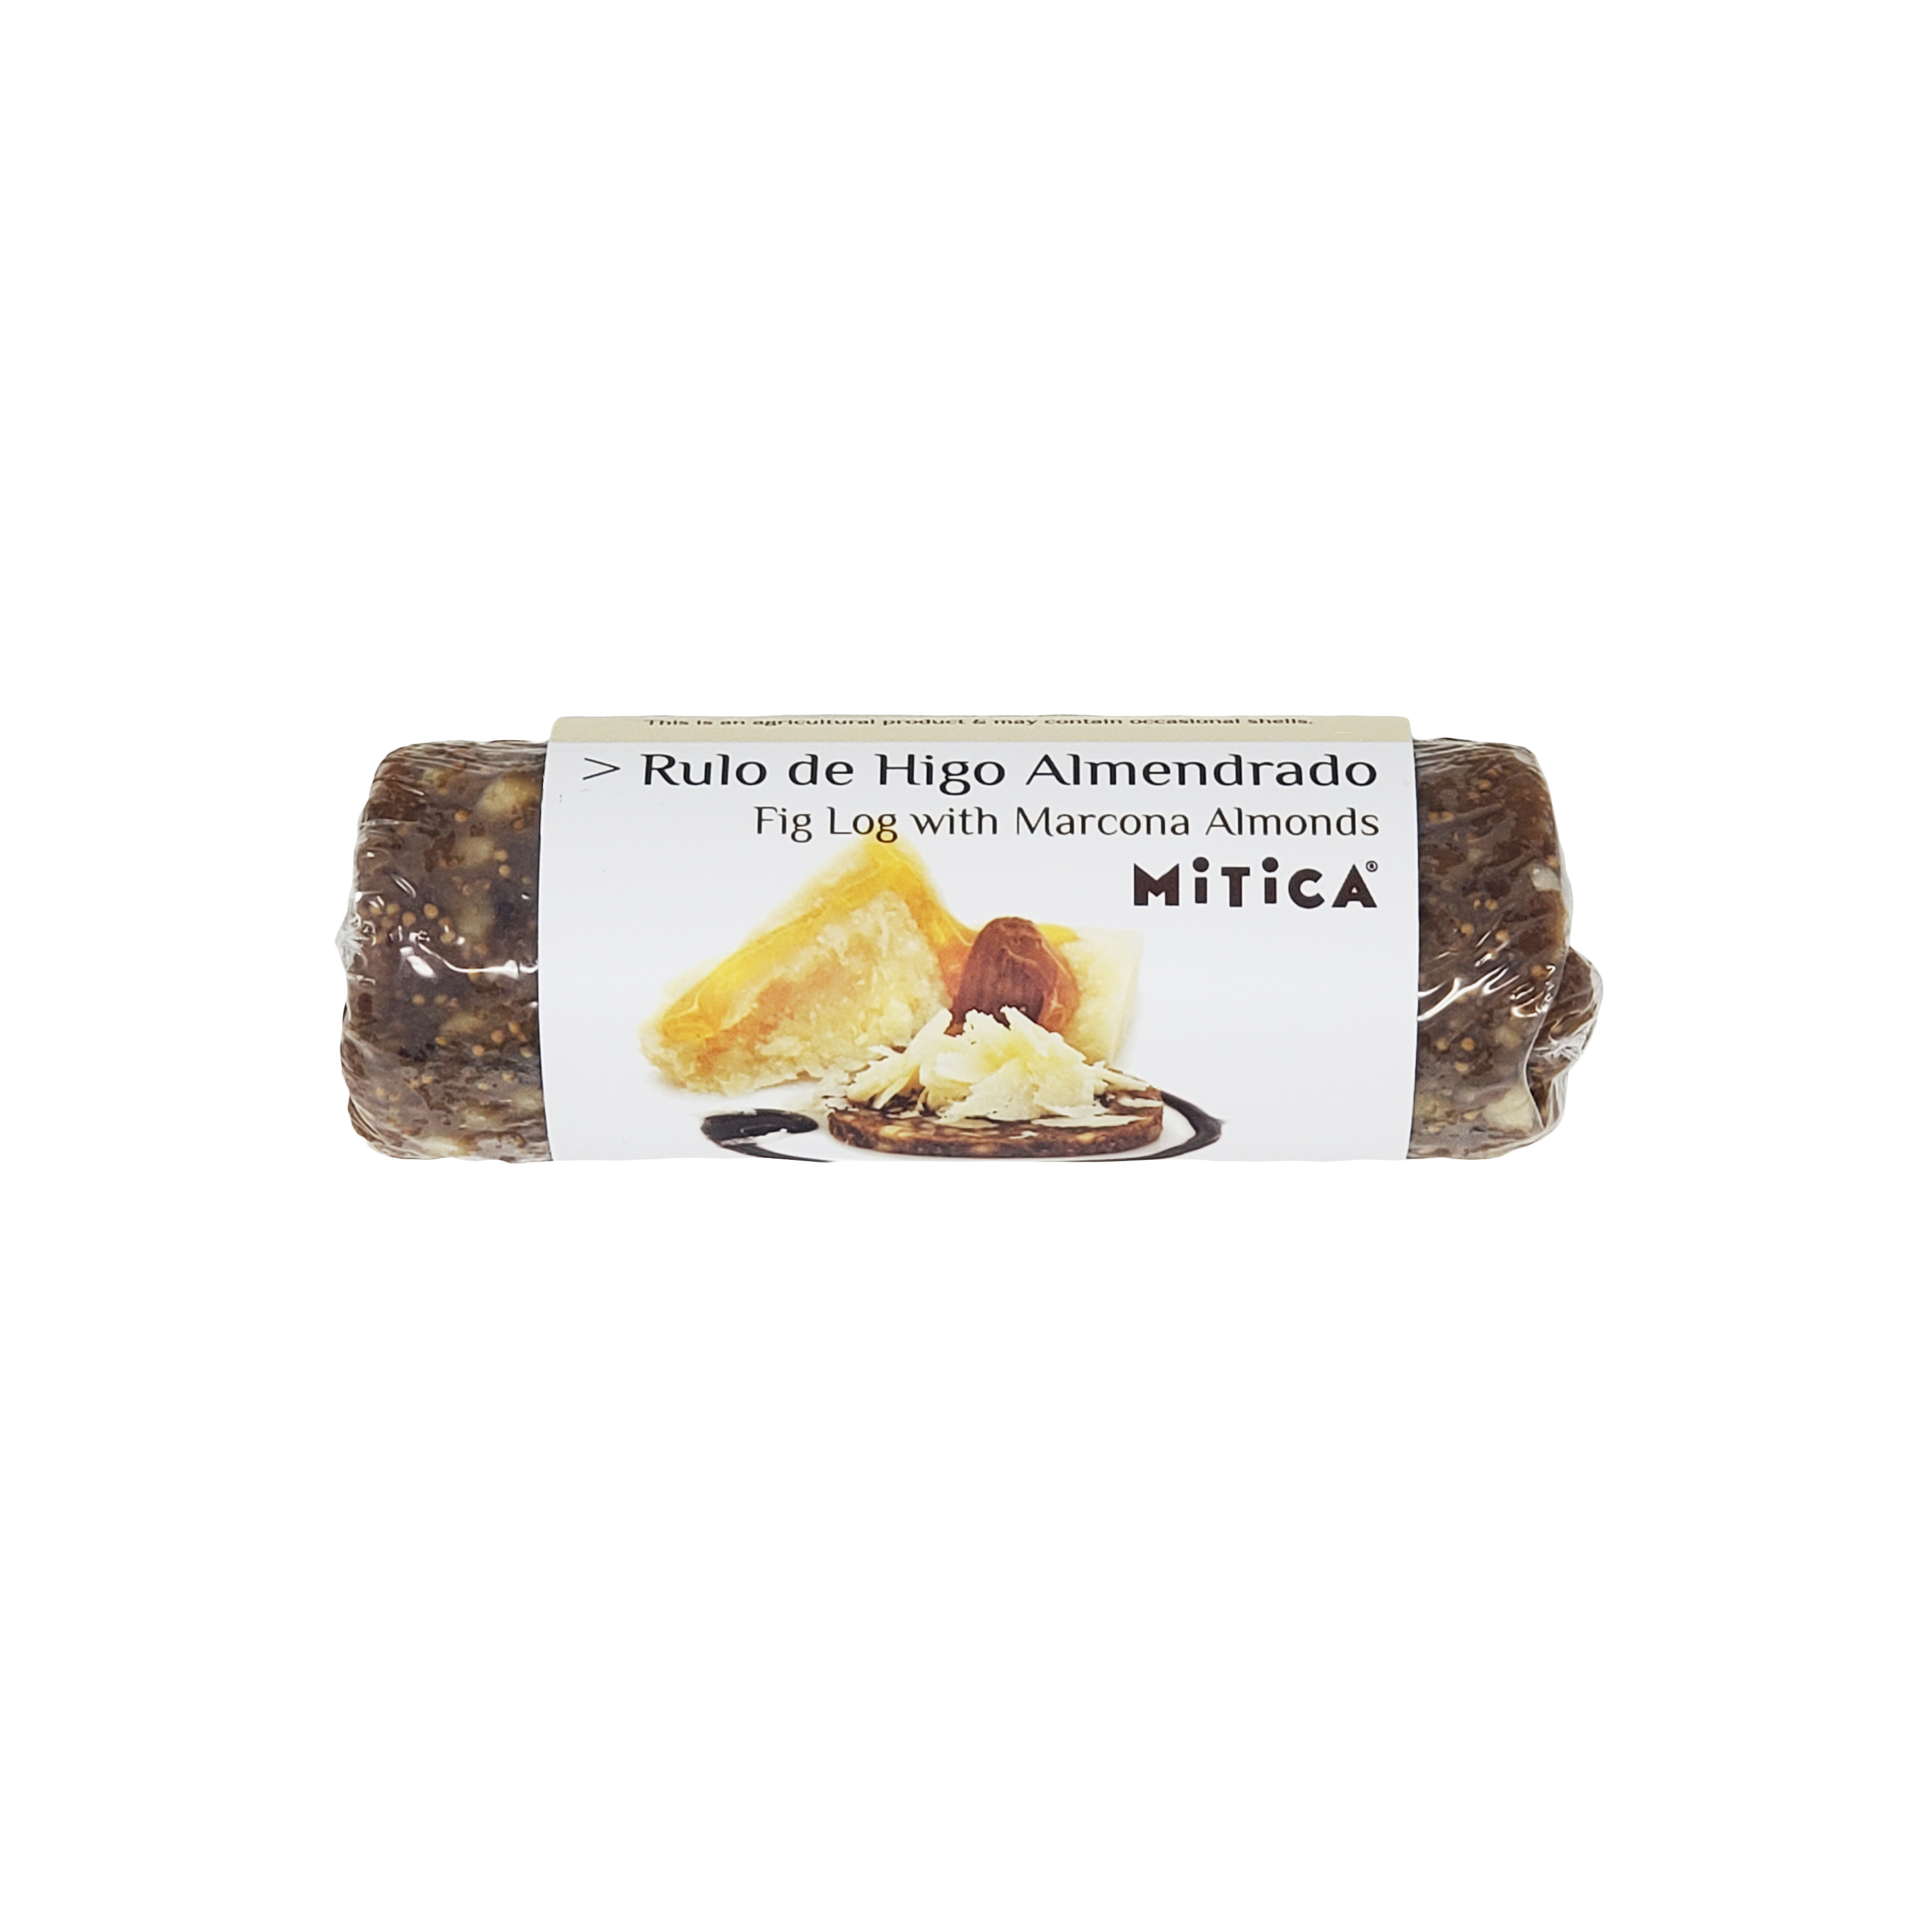 Mitica Date Almond Cake